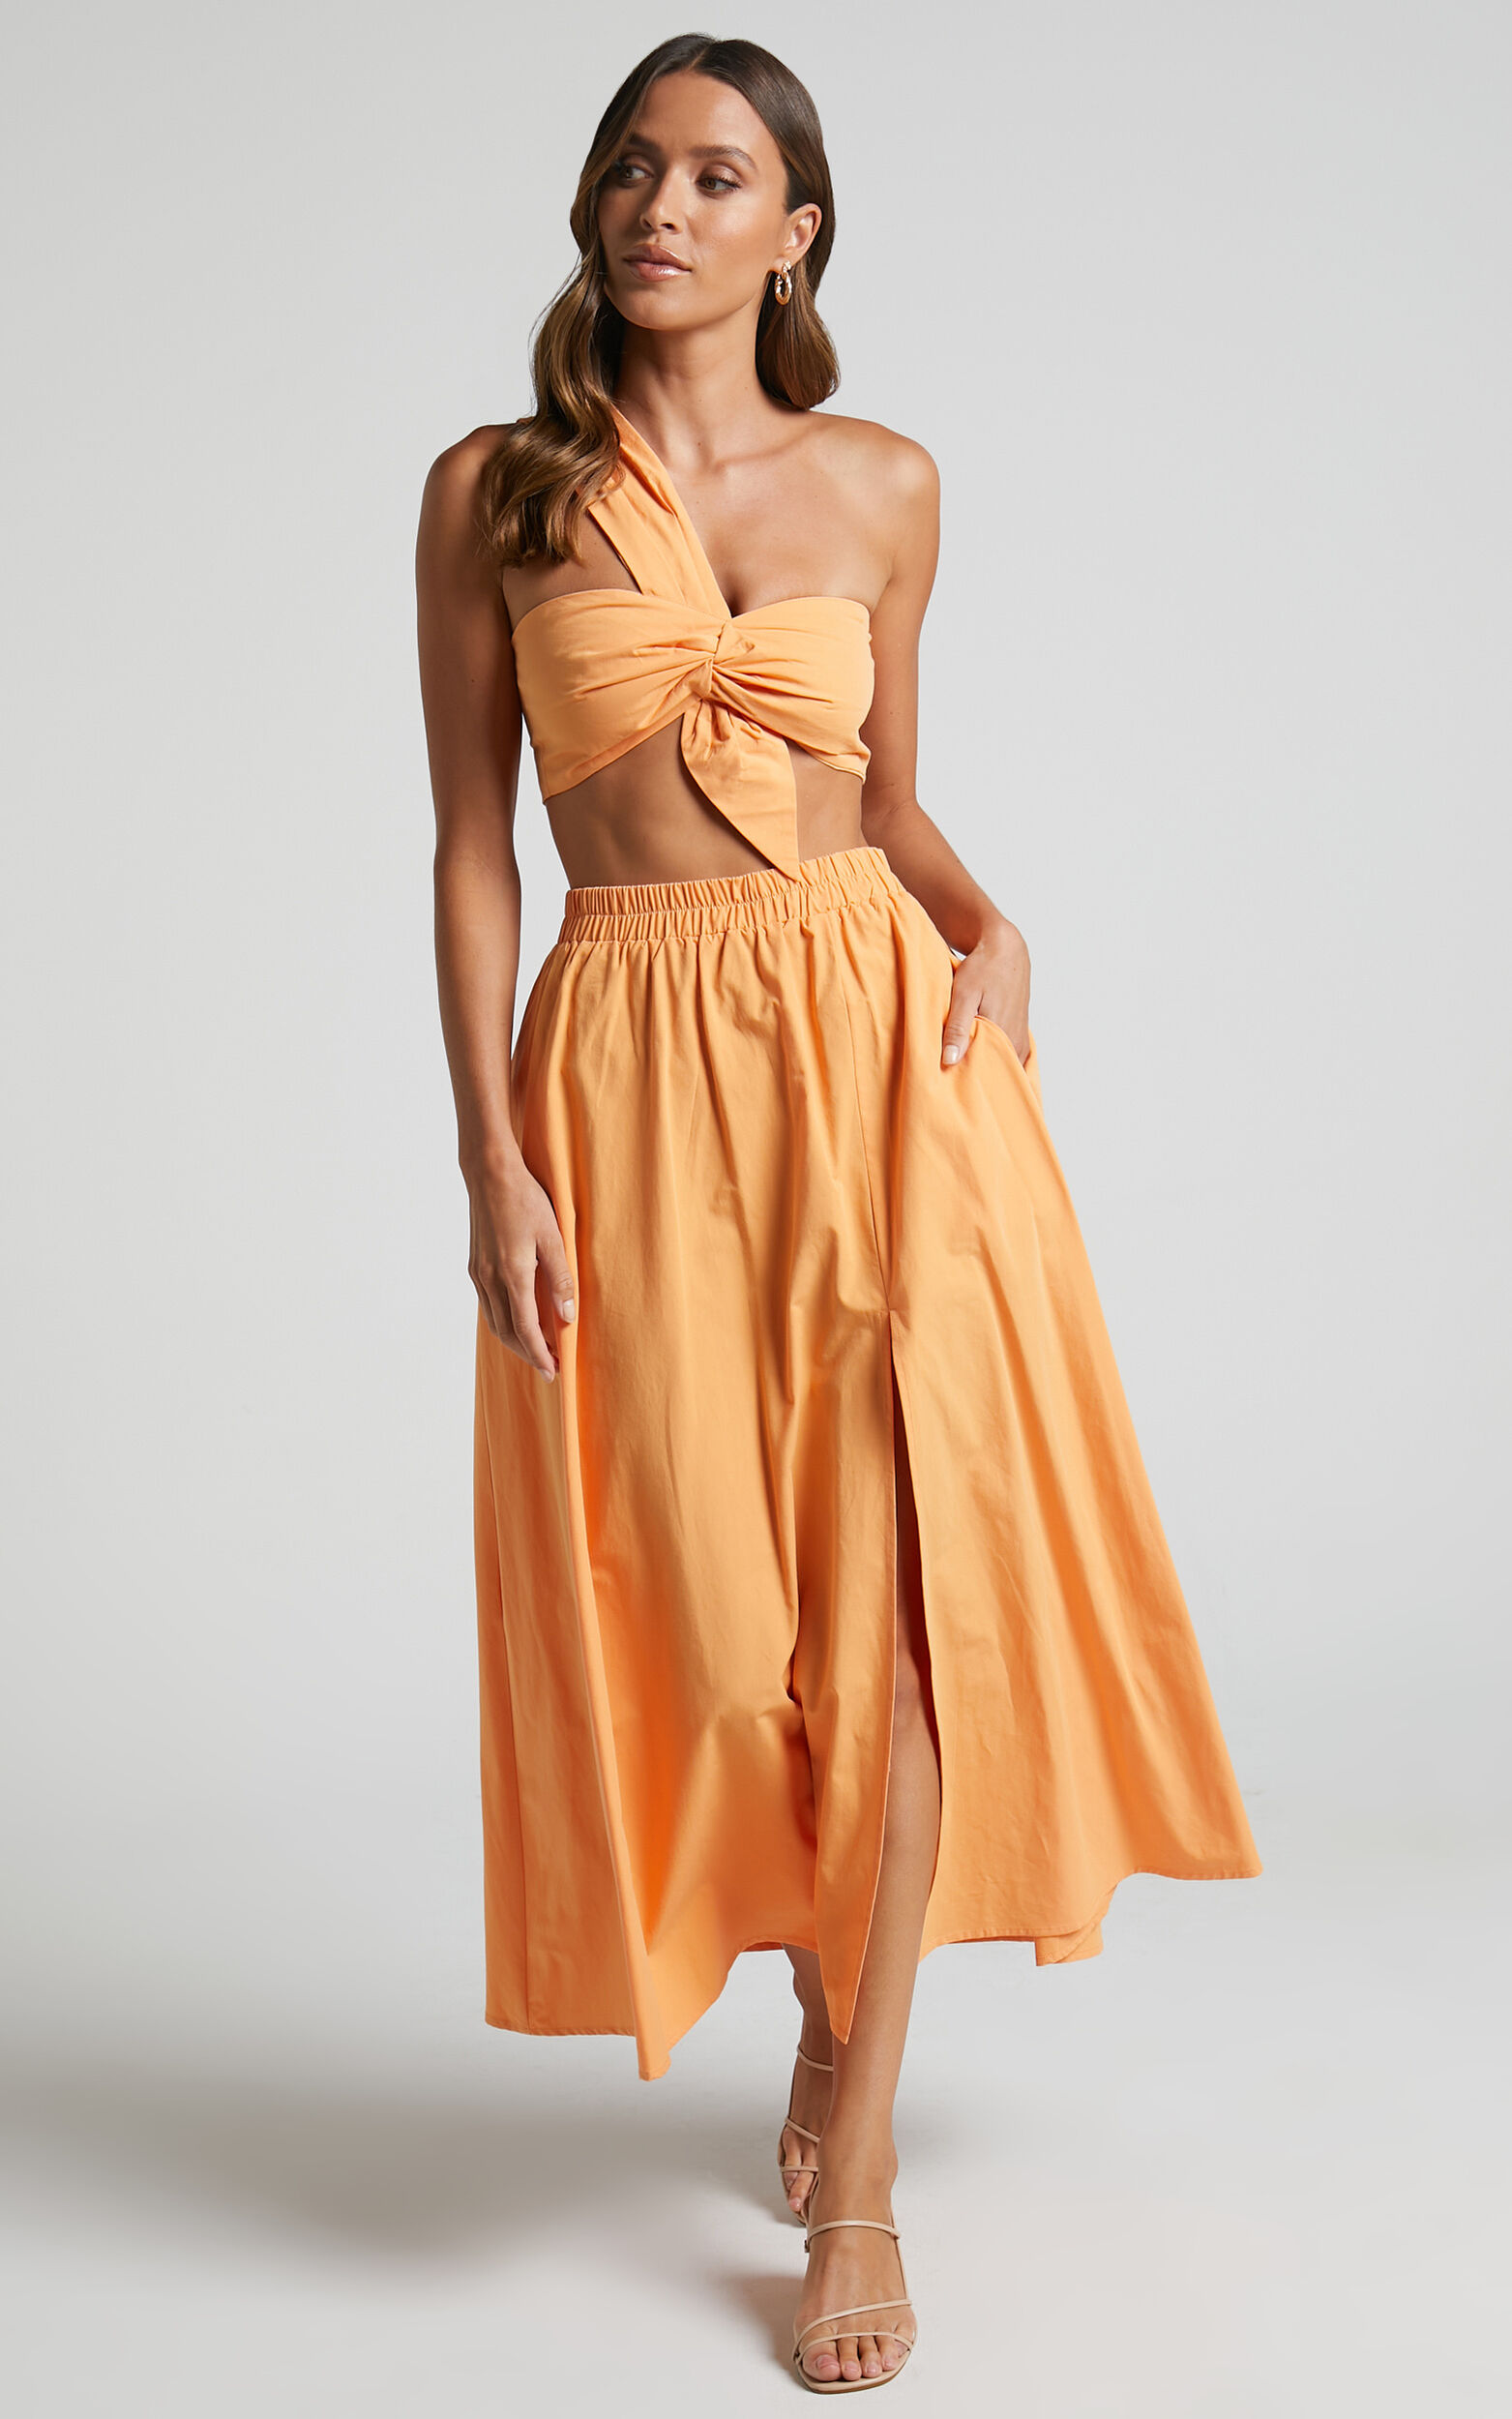 Sula Two Piece Set - One Shoulder Bralette Crop Top and Midi Skirt Set in Sherbet Orange - 04, ORG2